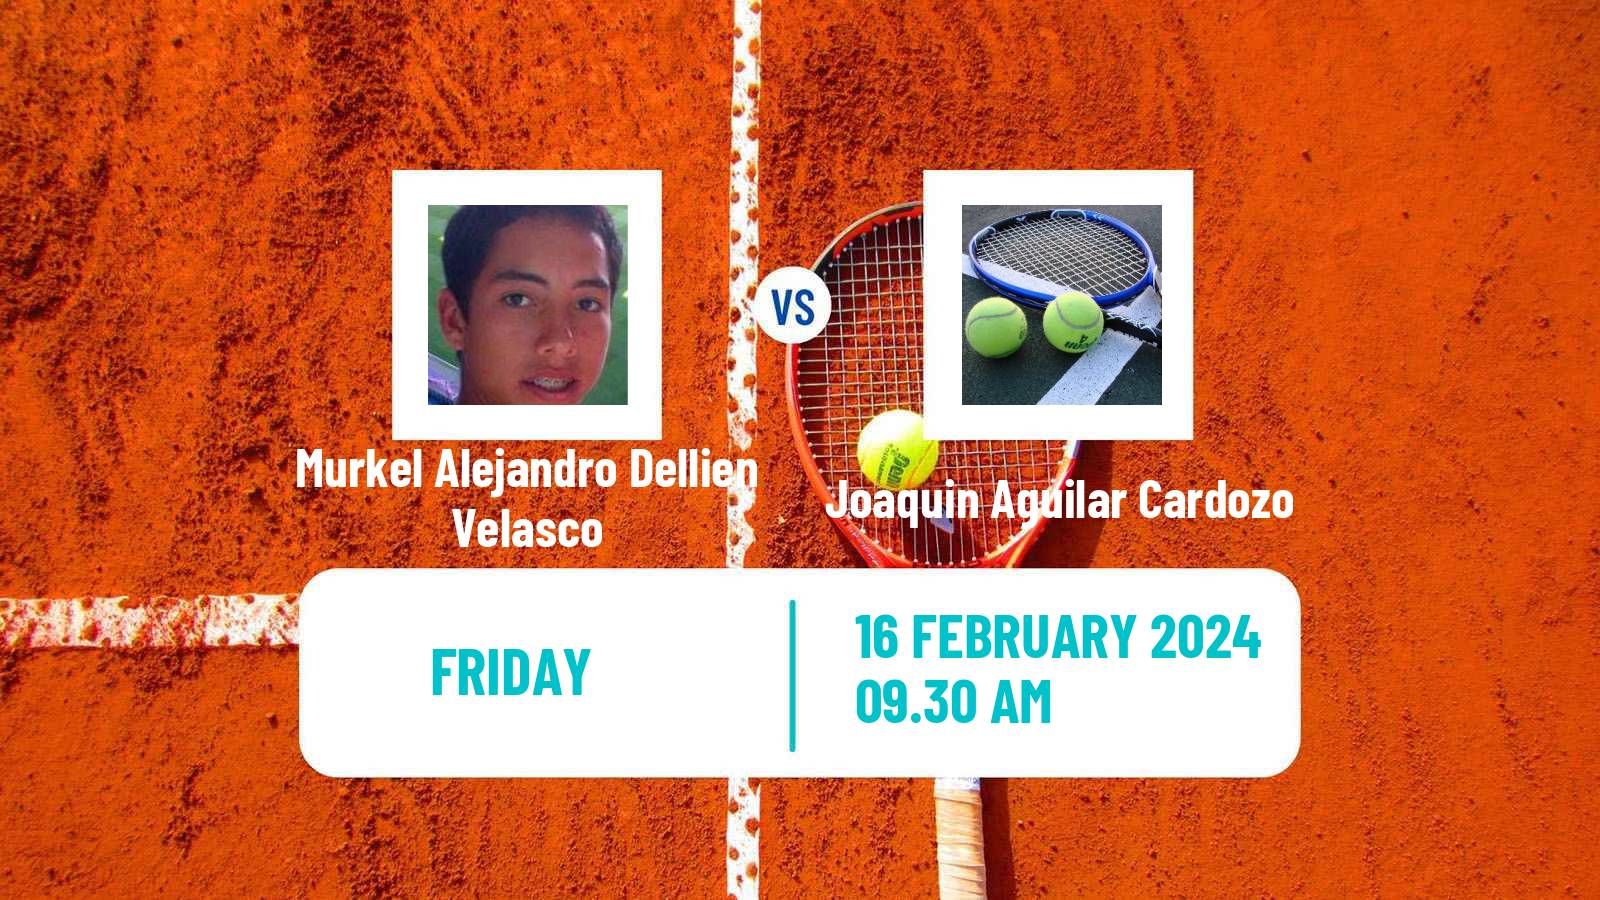 Tennis ITF M25 Punta Del Este 2 Men Murkel Alejandro Dellien Velasco - Joaquin Aguilar Cardozo